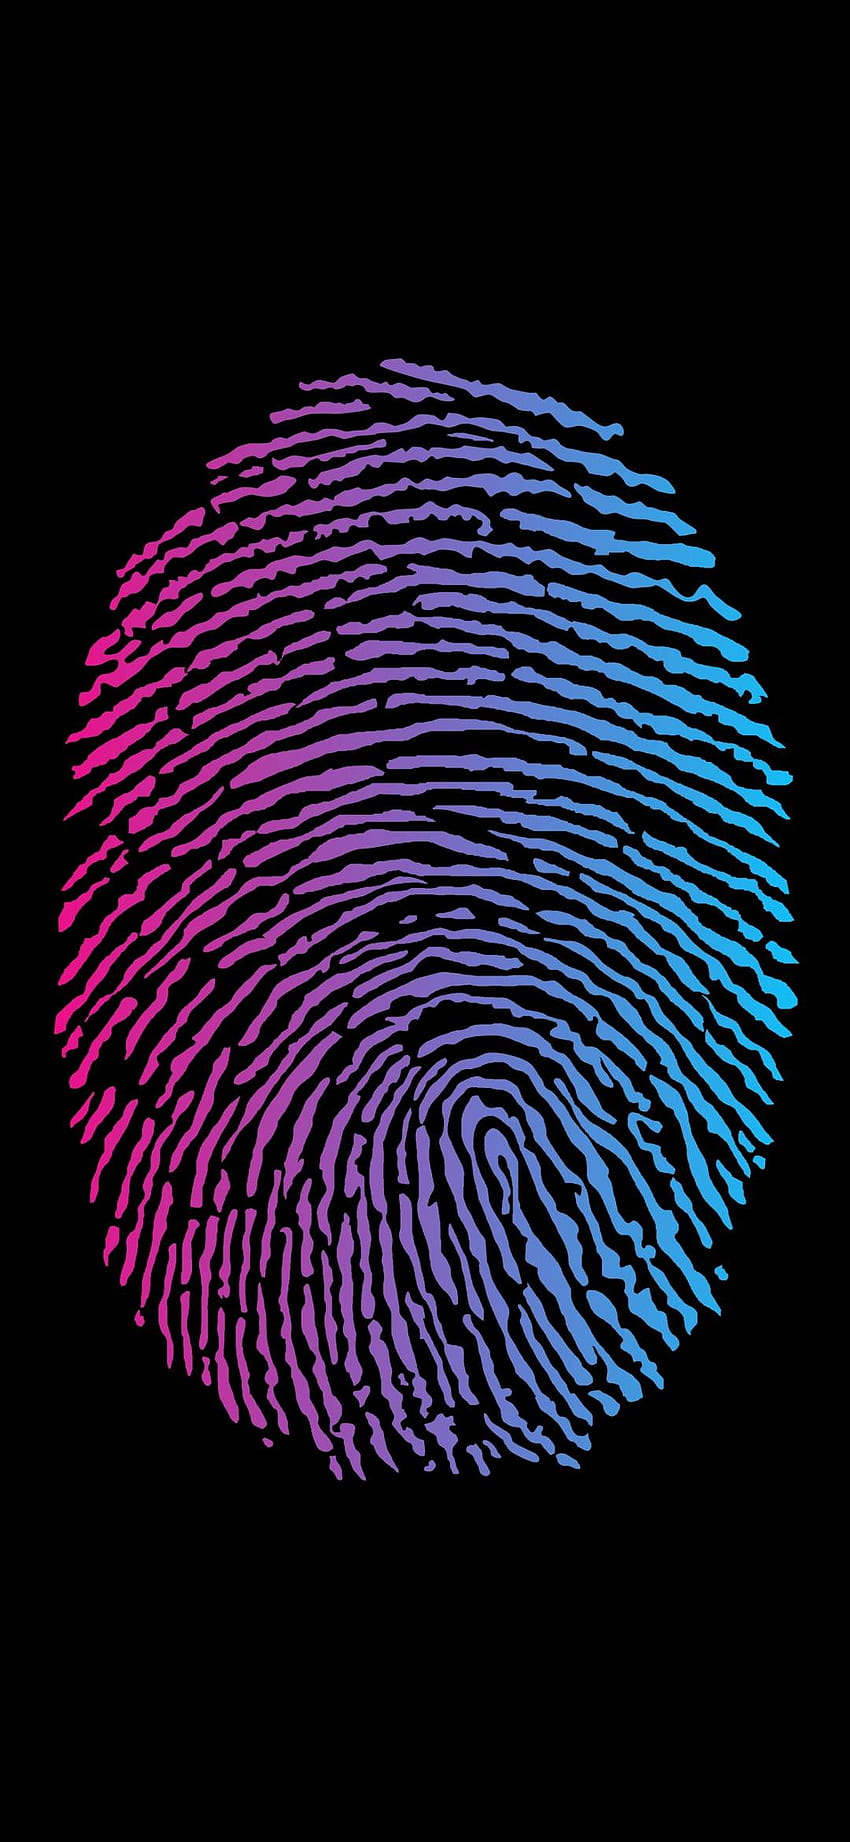 Don't Try - My Password is Fingerprint Wallpaper